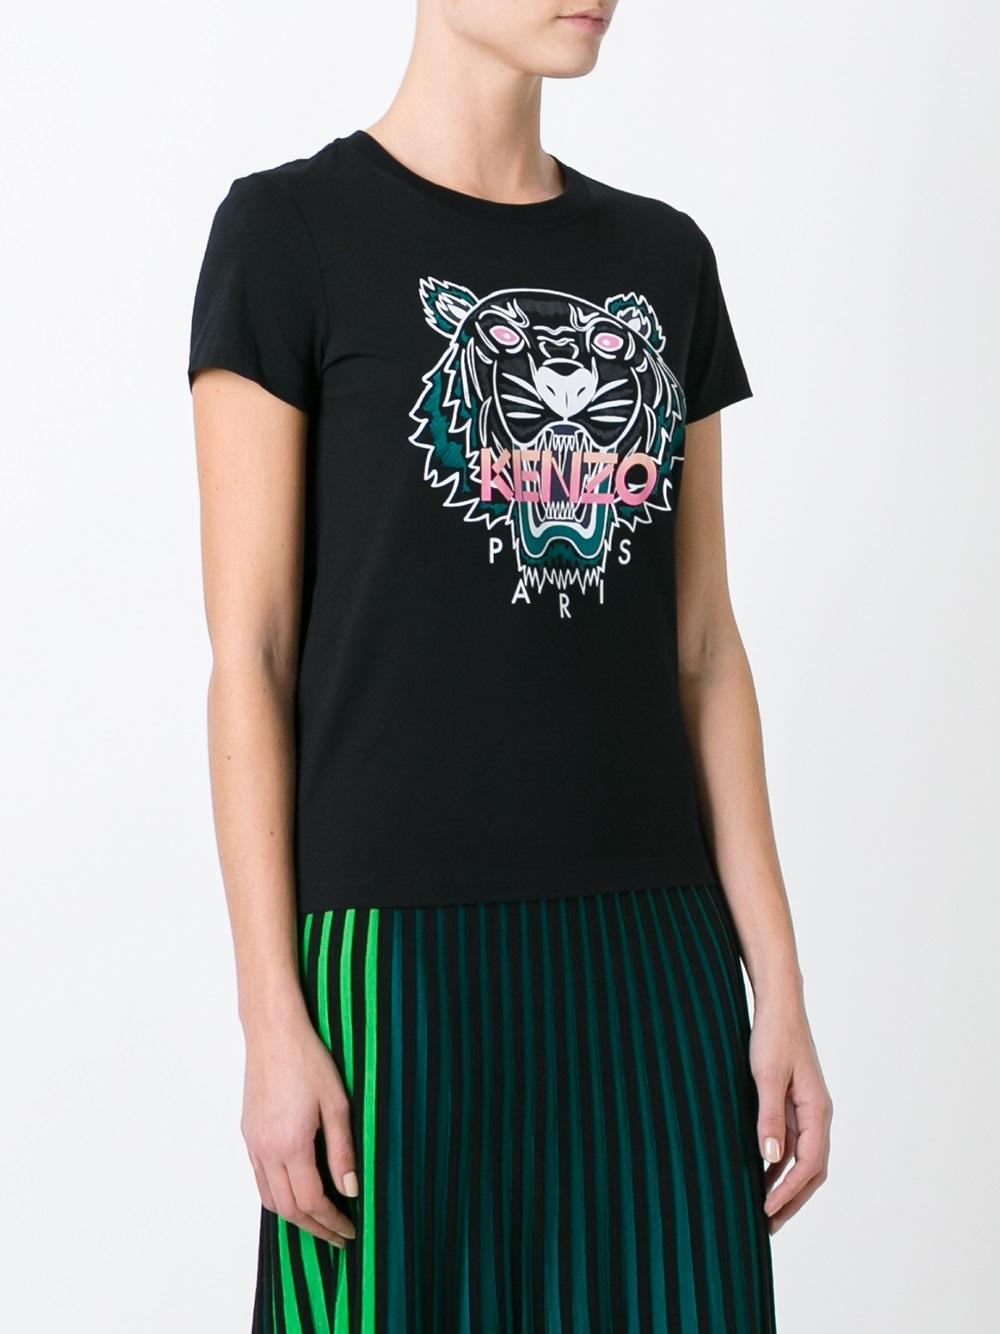 Lyst - Kenzo Tiger T-shirt in Black